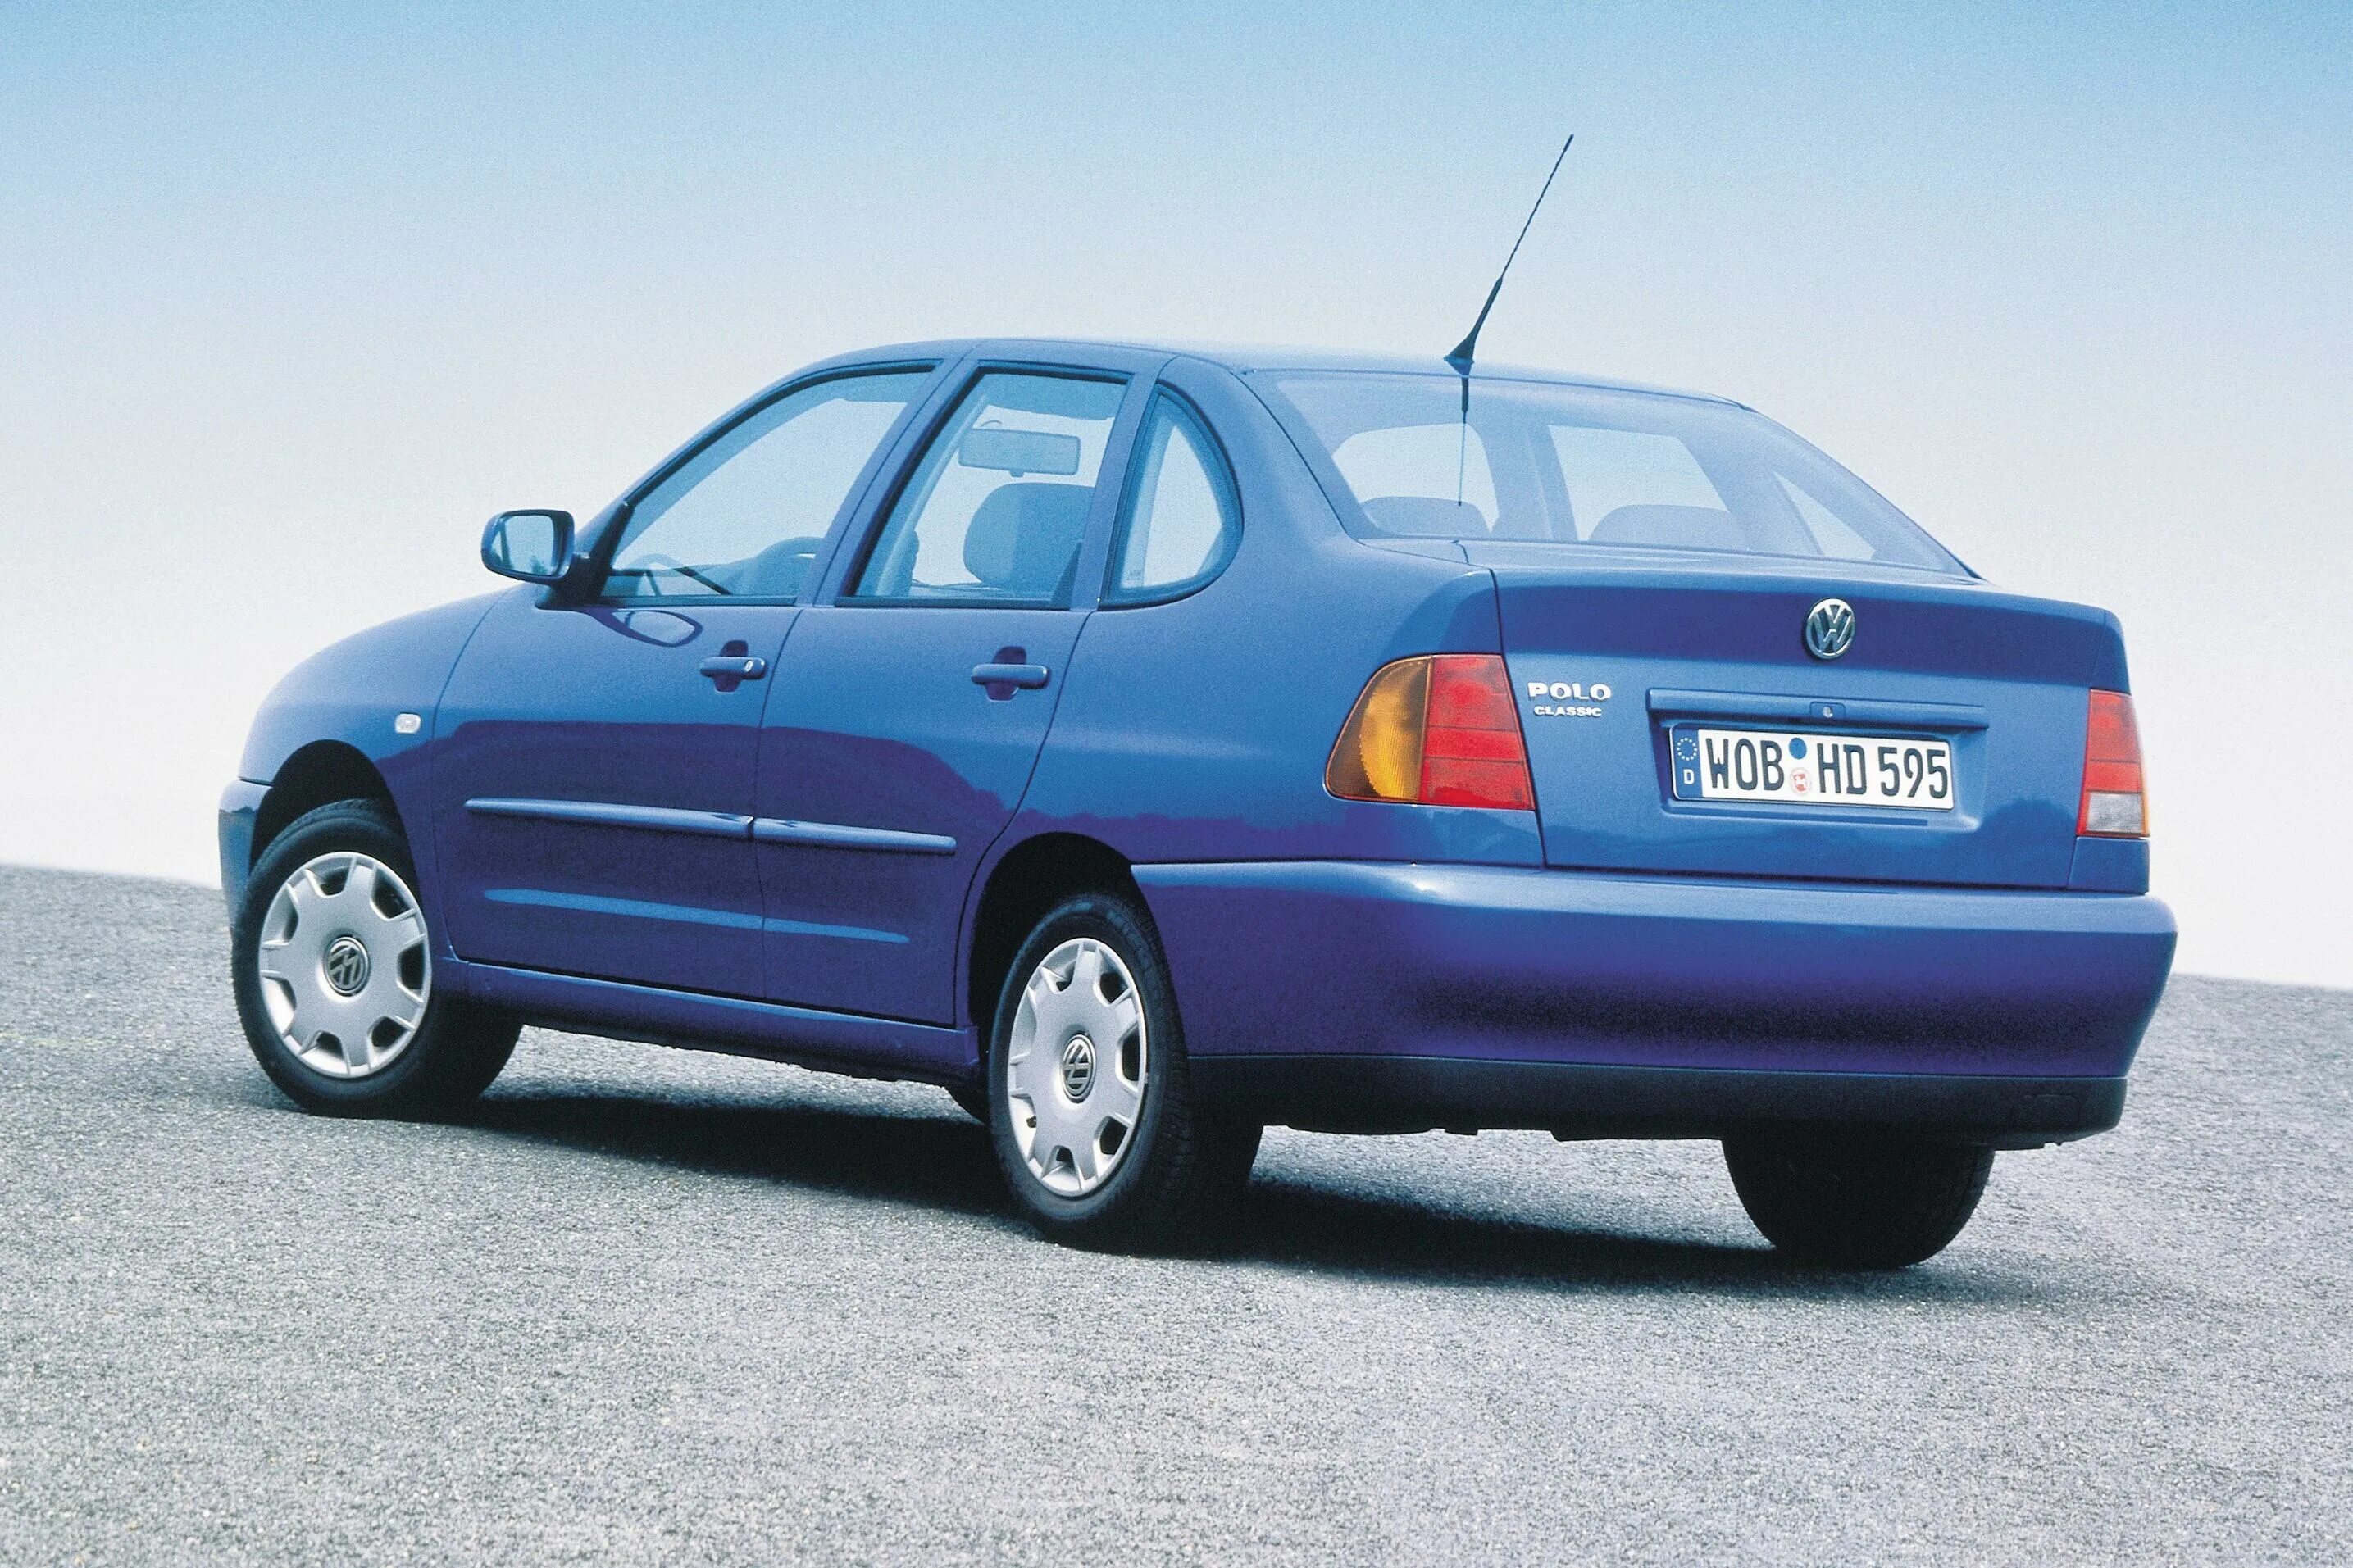 1999 год характеристика. Фольксваген поло Классик 1996 седан. Volkswagen Polo Classic 1999. Фольксваген поло Классик 1998 седан. Volkswagen Polo Classic 1997.